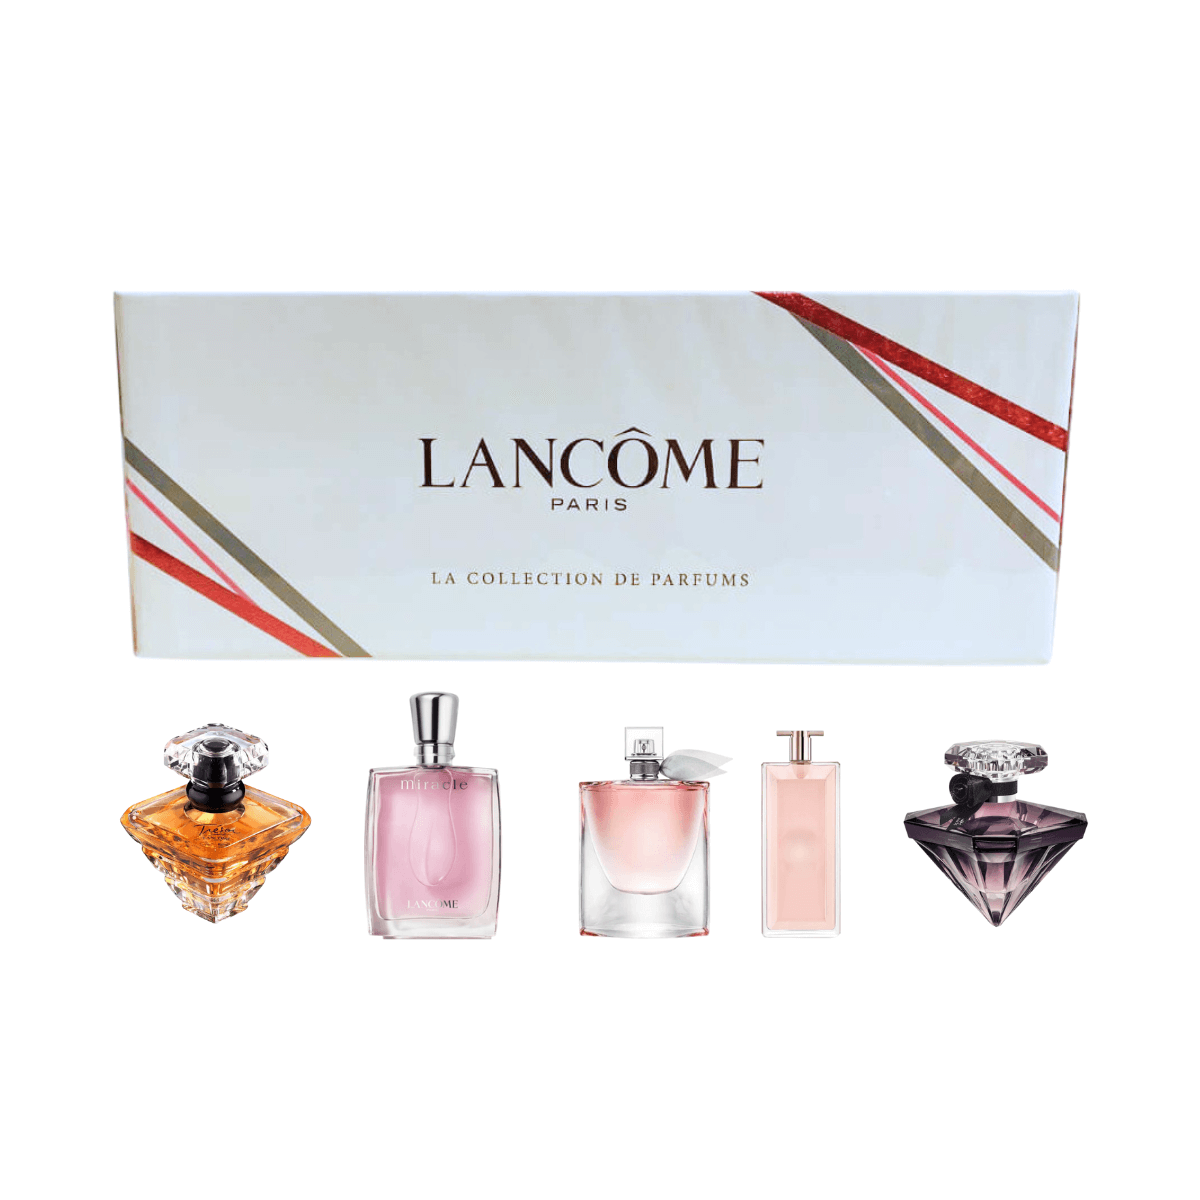 lancome travel set parfum